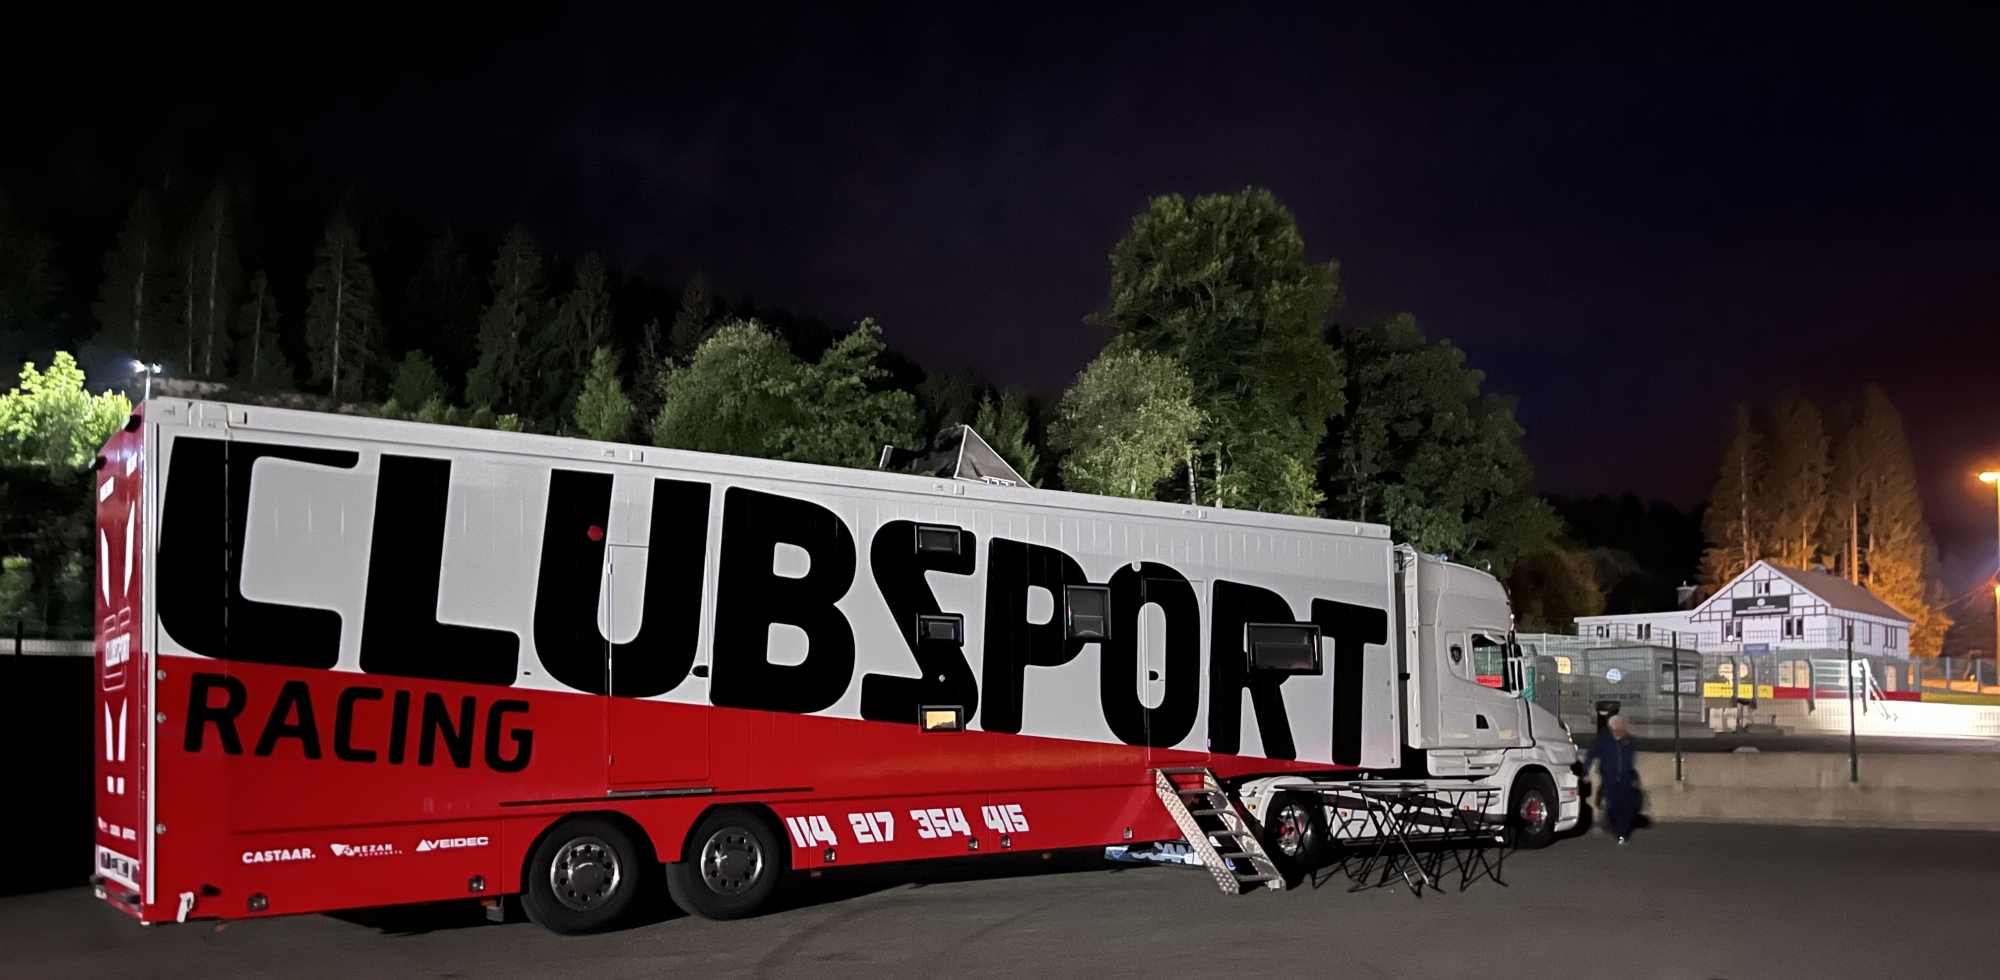 image 2 - Clubsport Racing met les petits plats dans les grands pour les Hankook 25 Hours VW Fun Cup